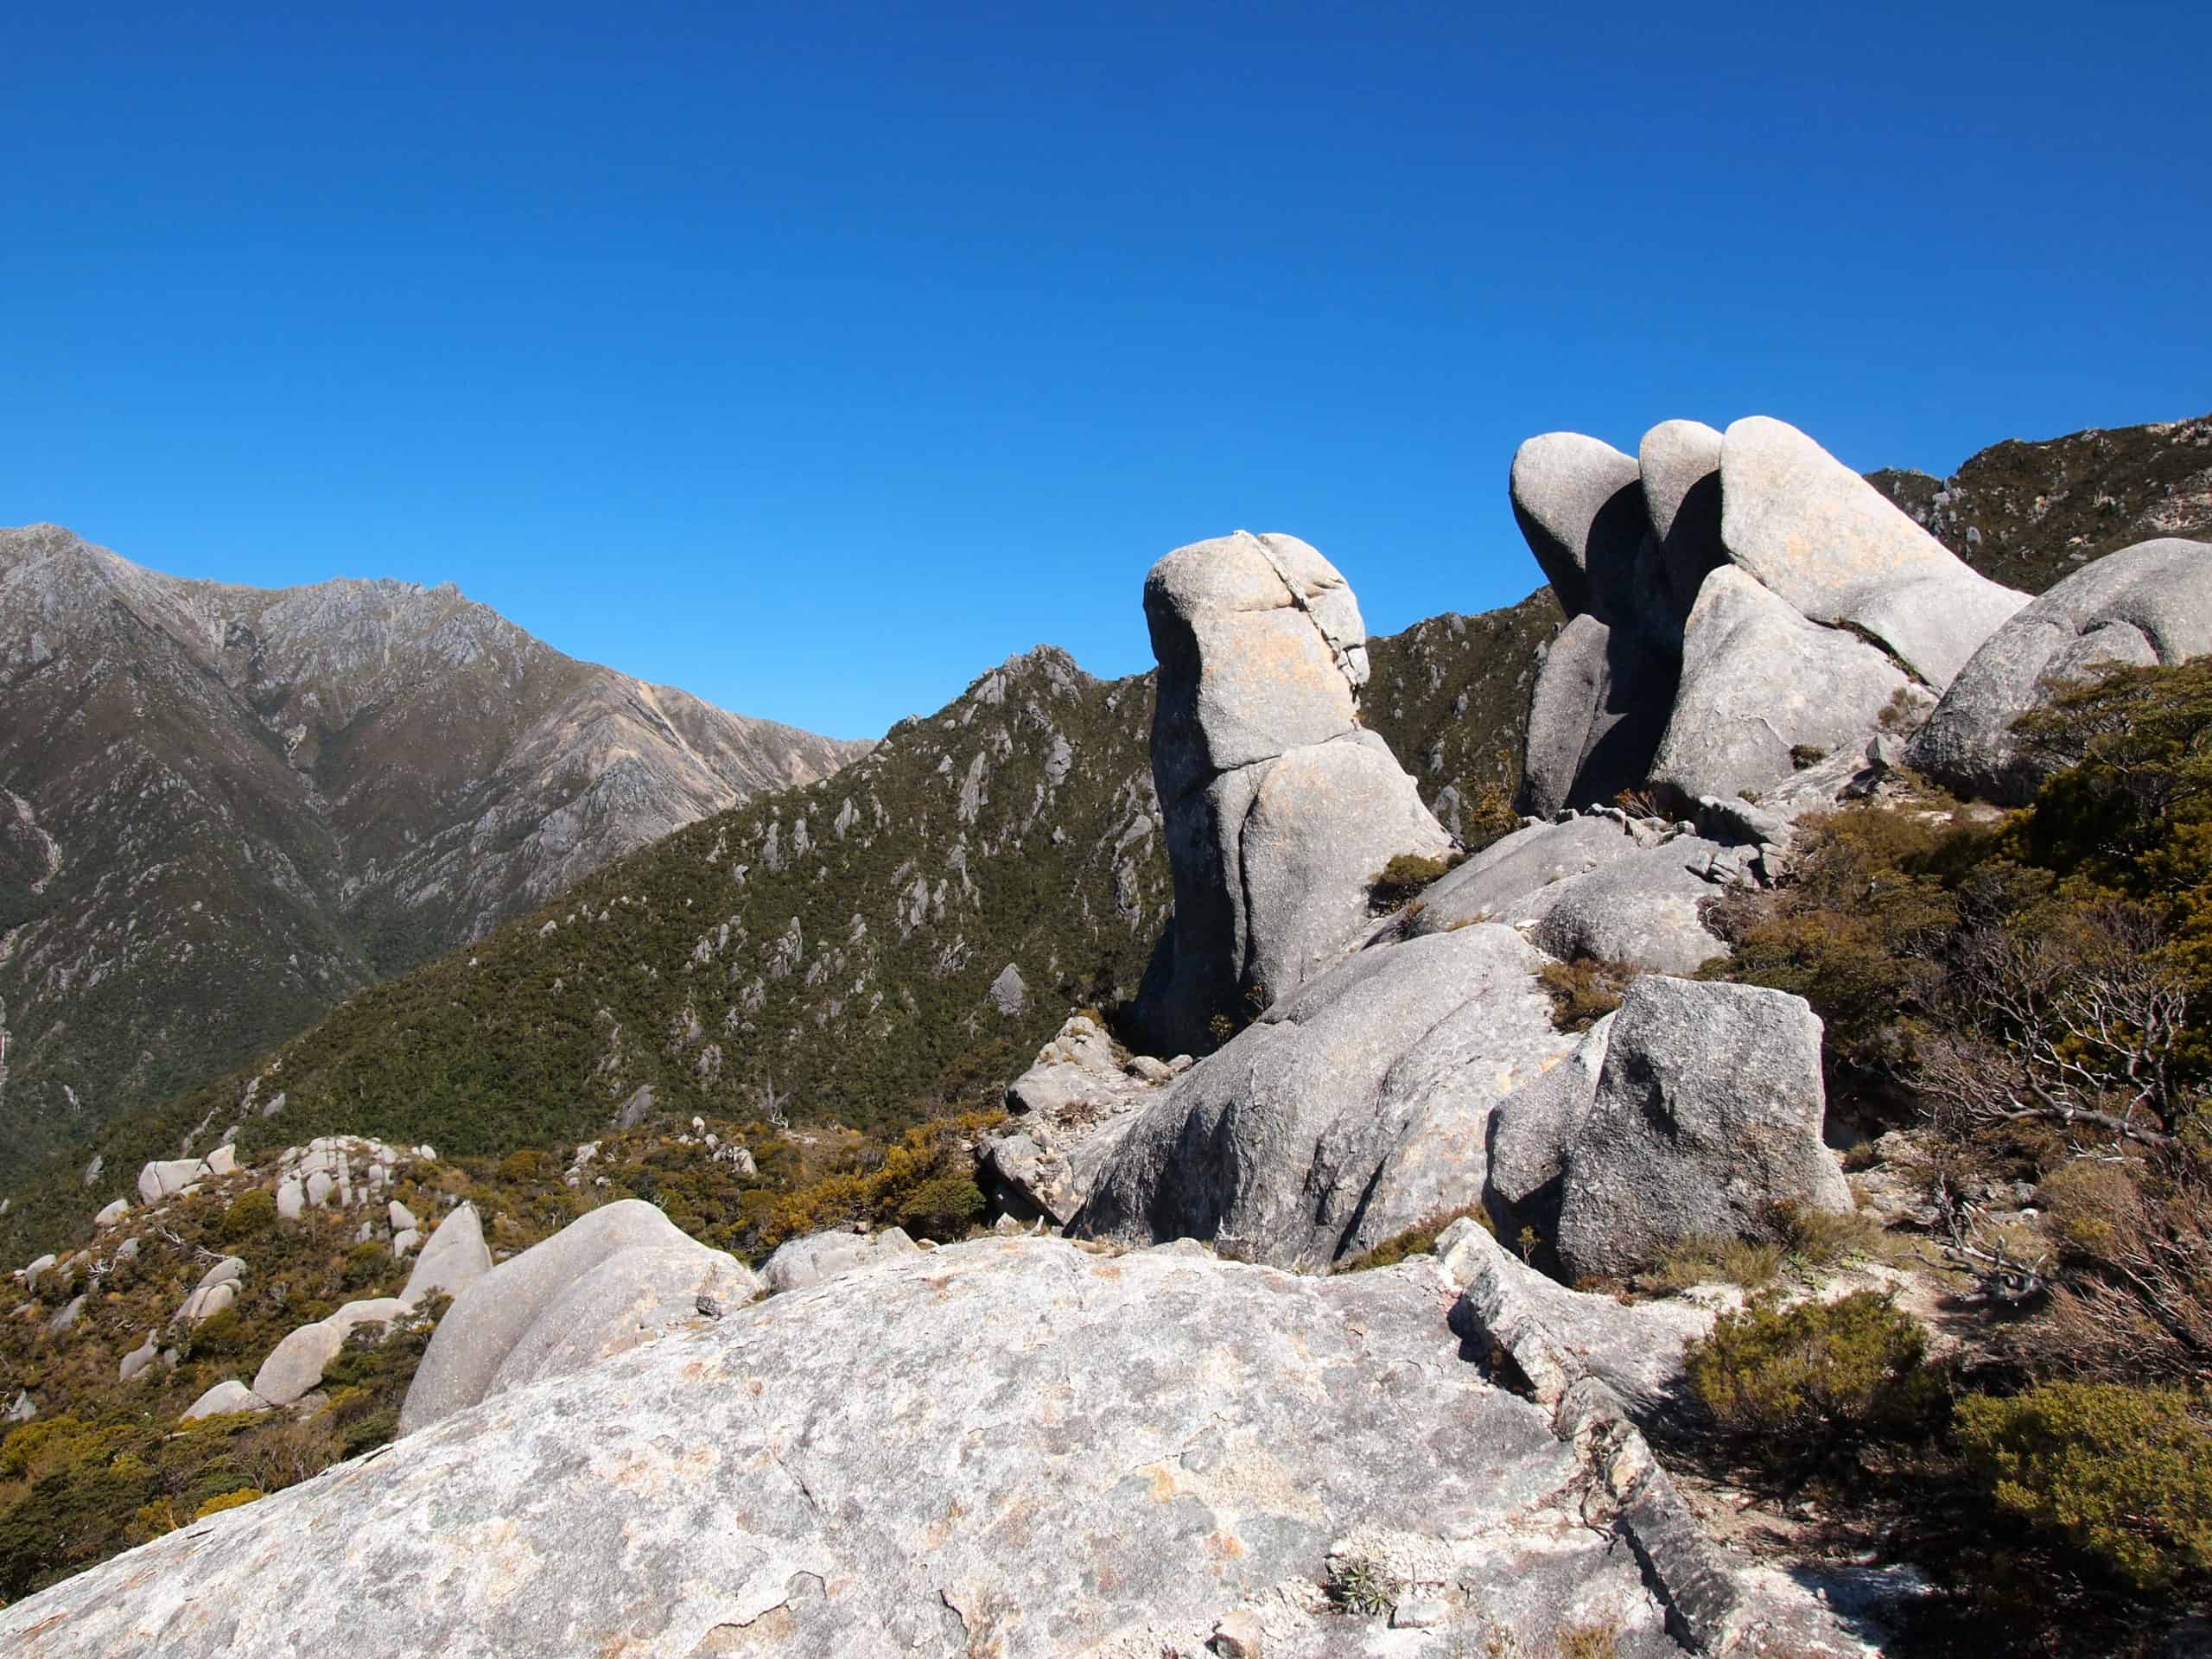 Mt Olympus rock formation